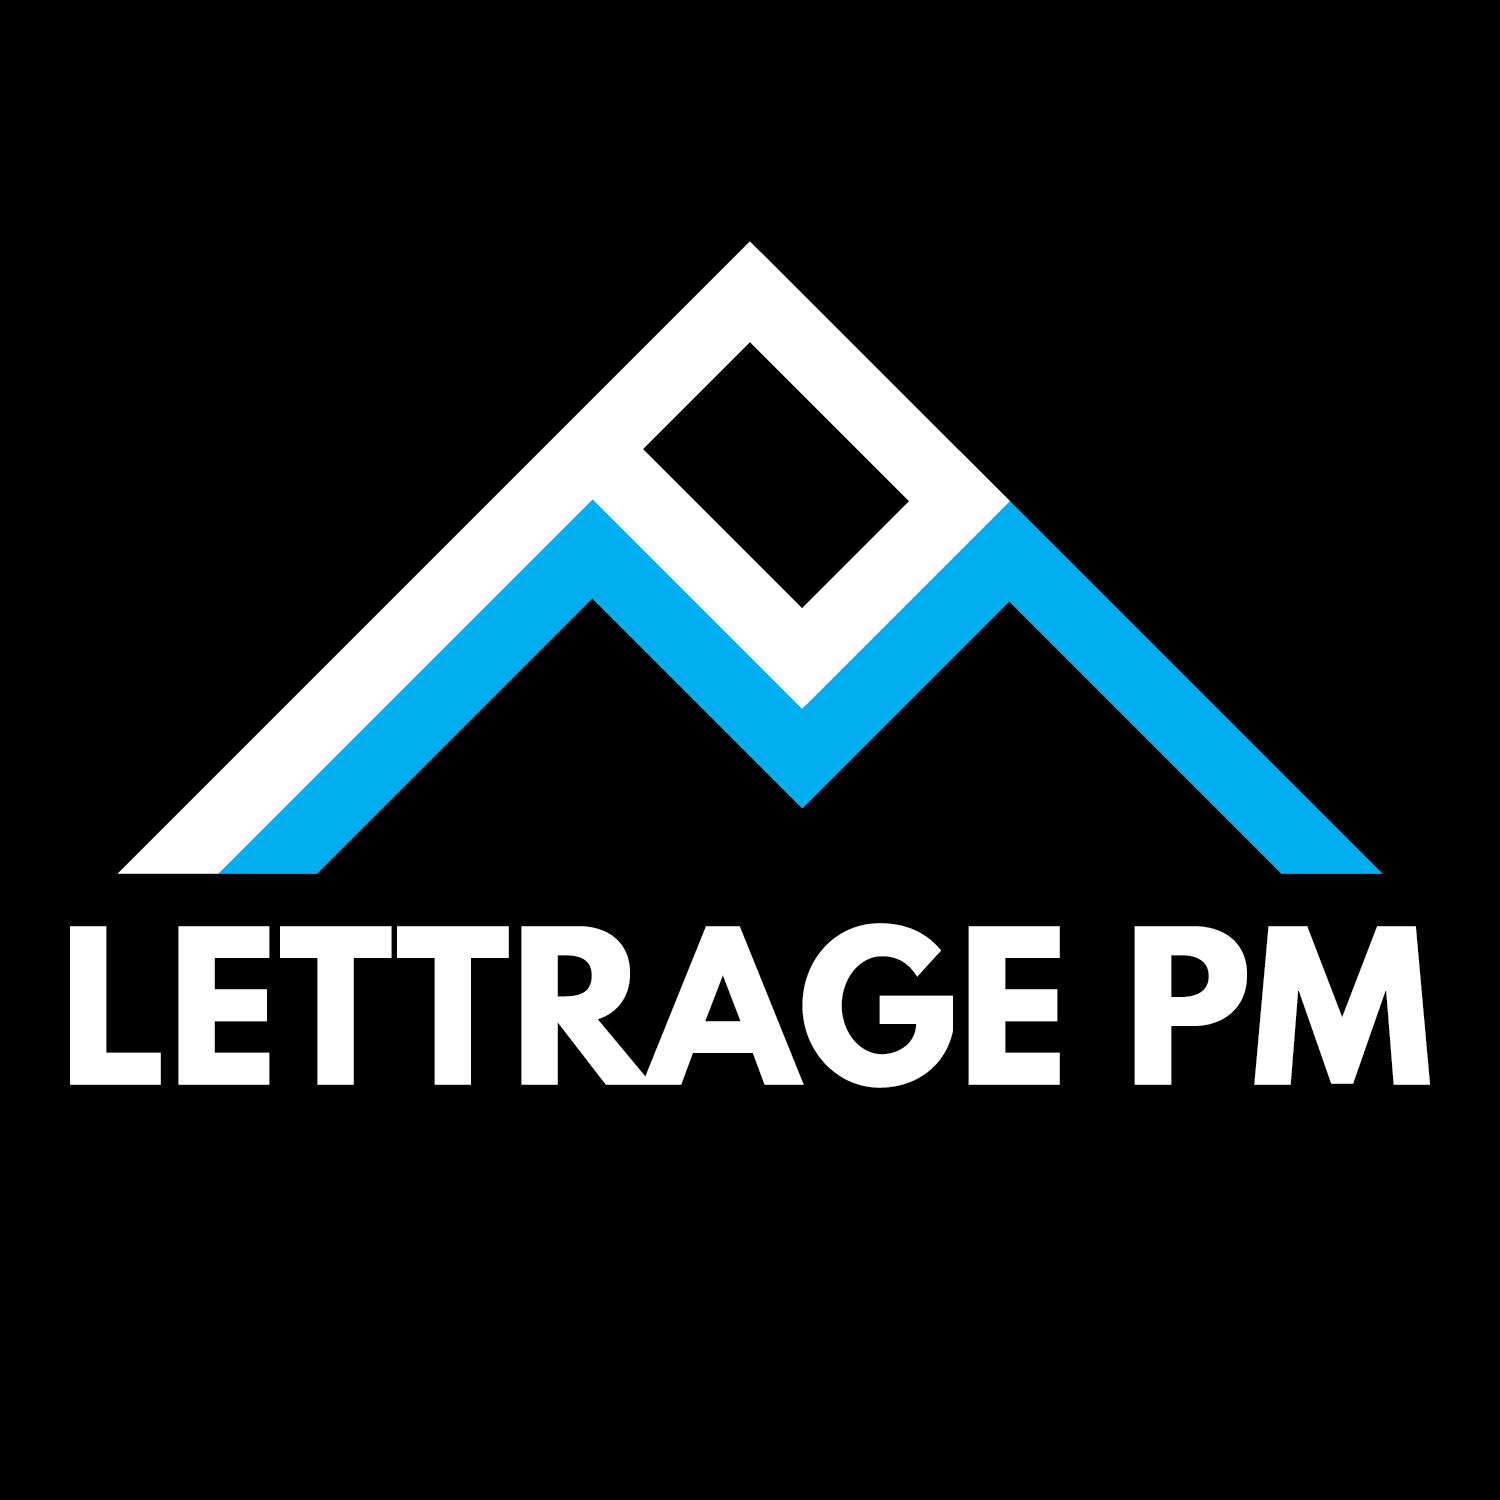 Lettrage PM - Sign Lettering